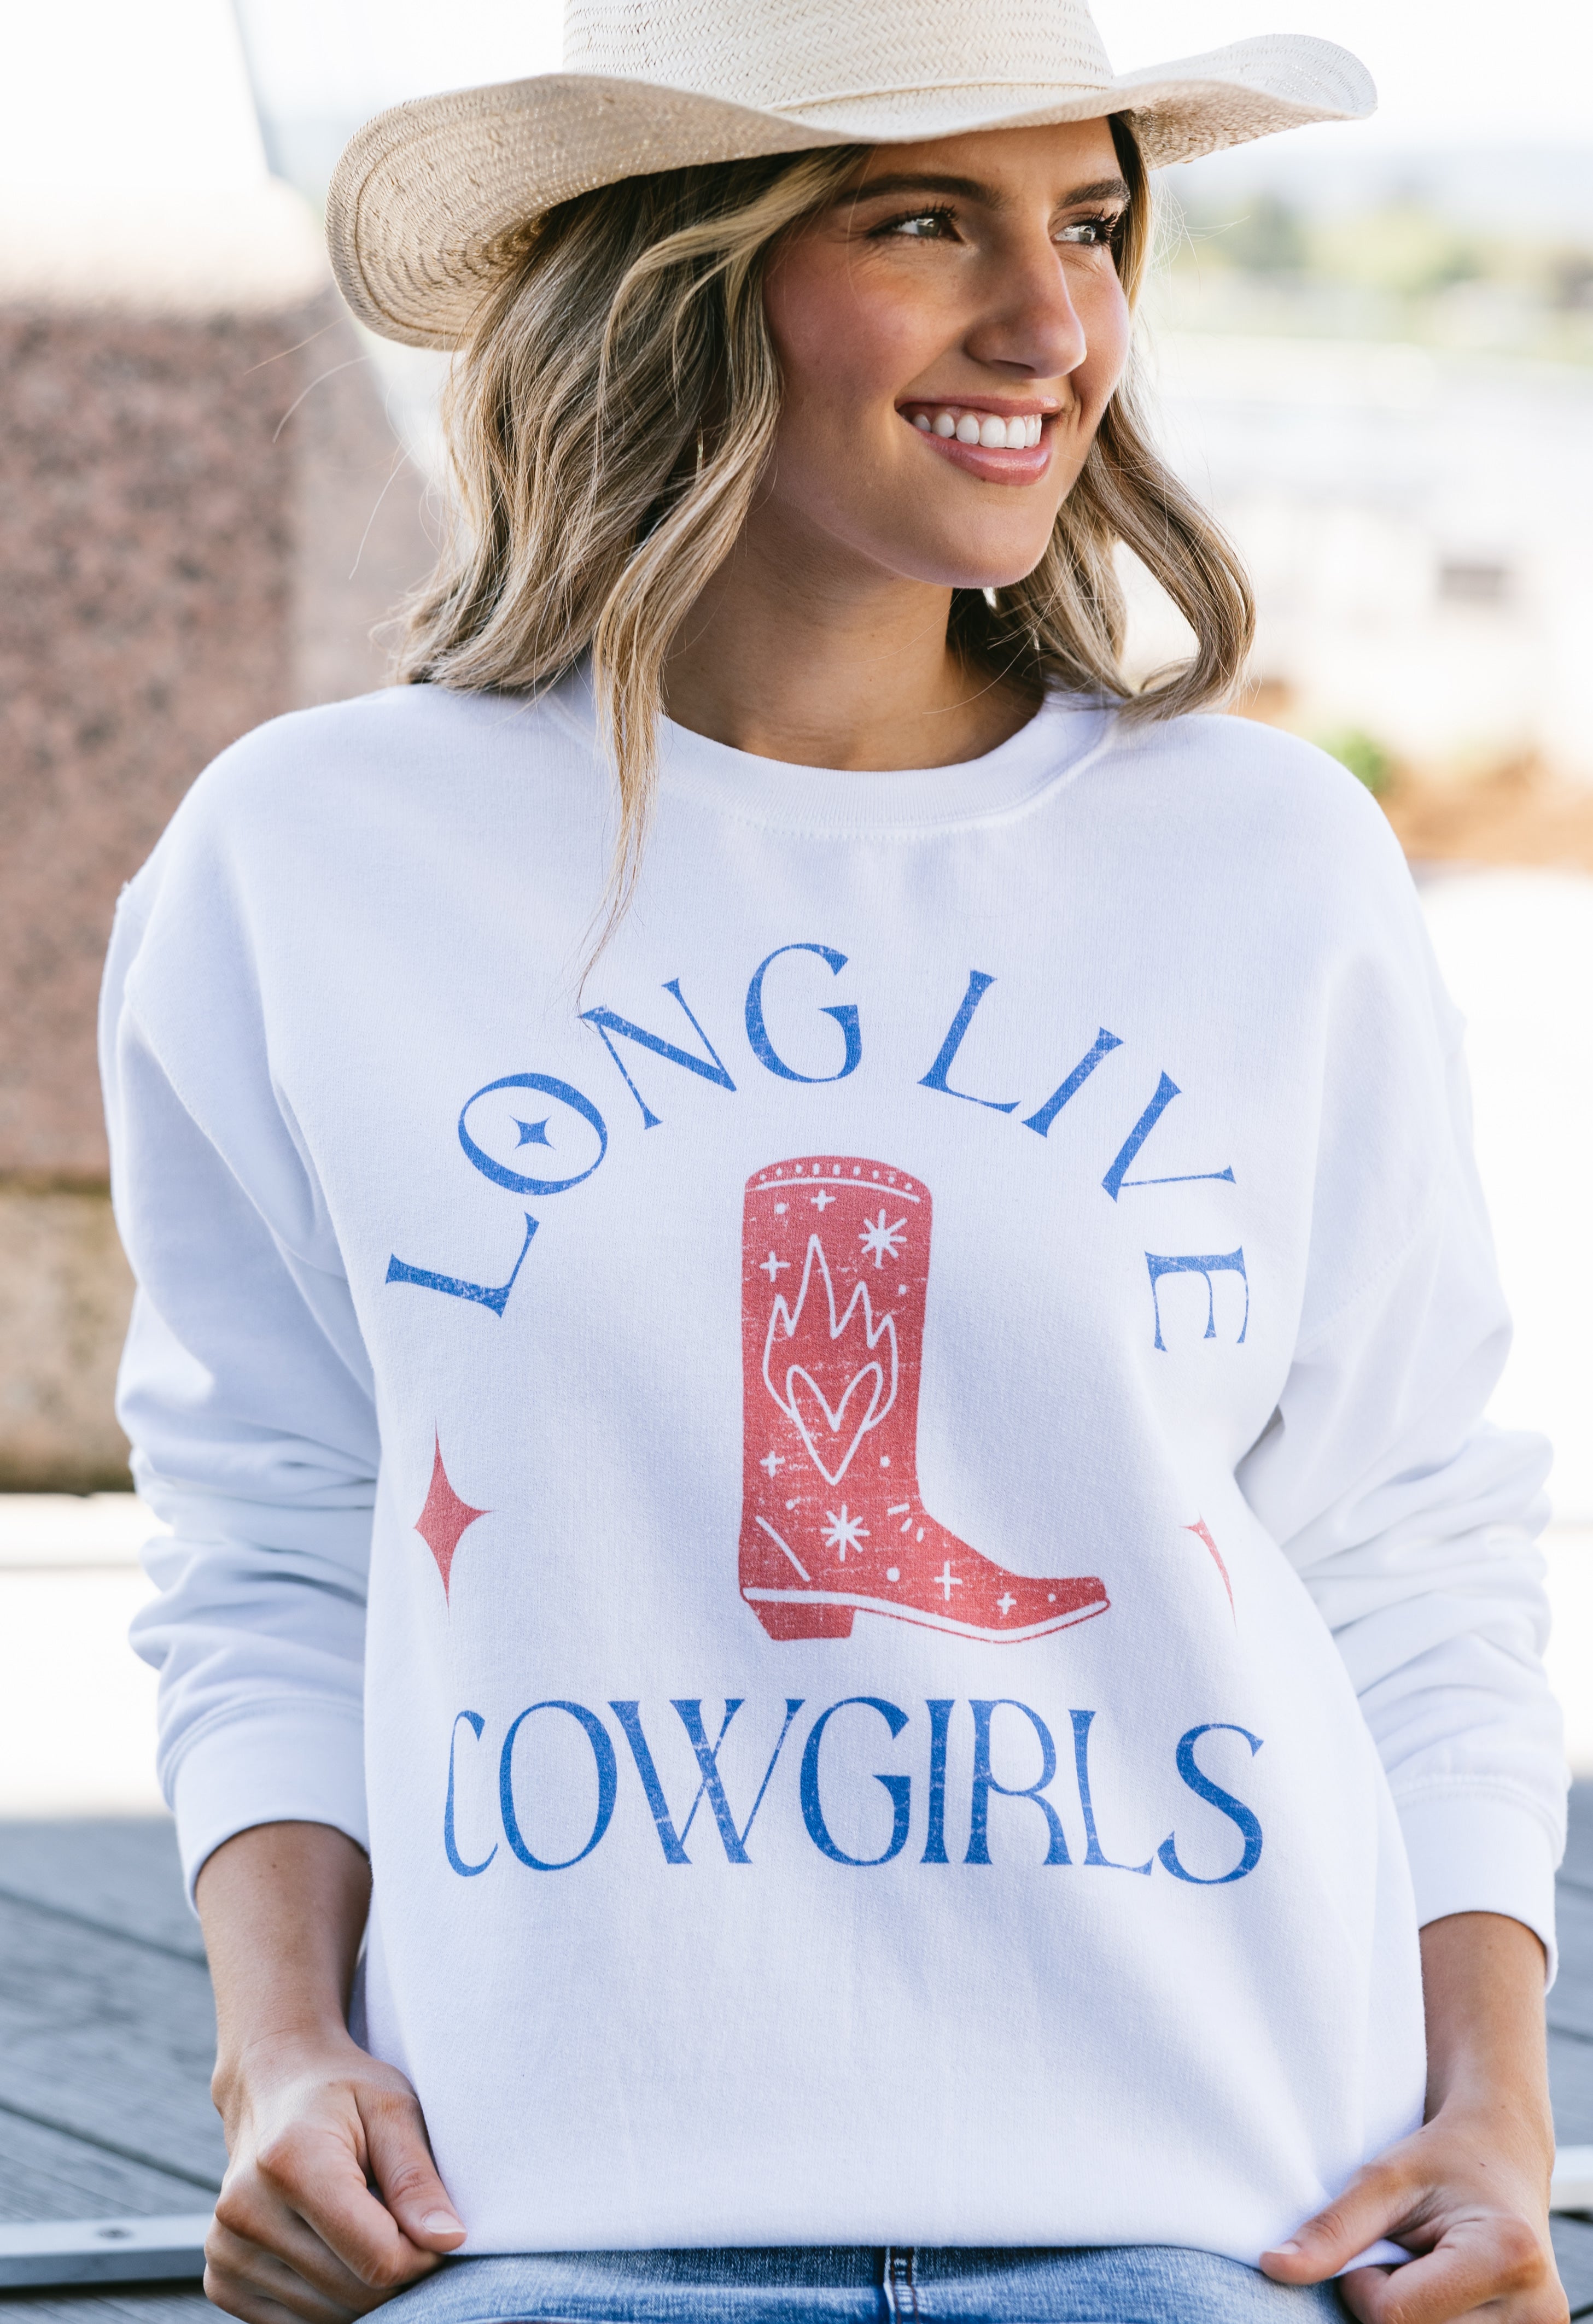 Long Live Cowgirls Sweatshirt - WHITE - willows clothing SWEATSHIRT